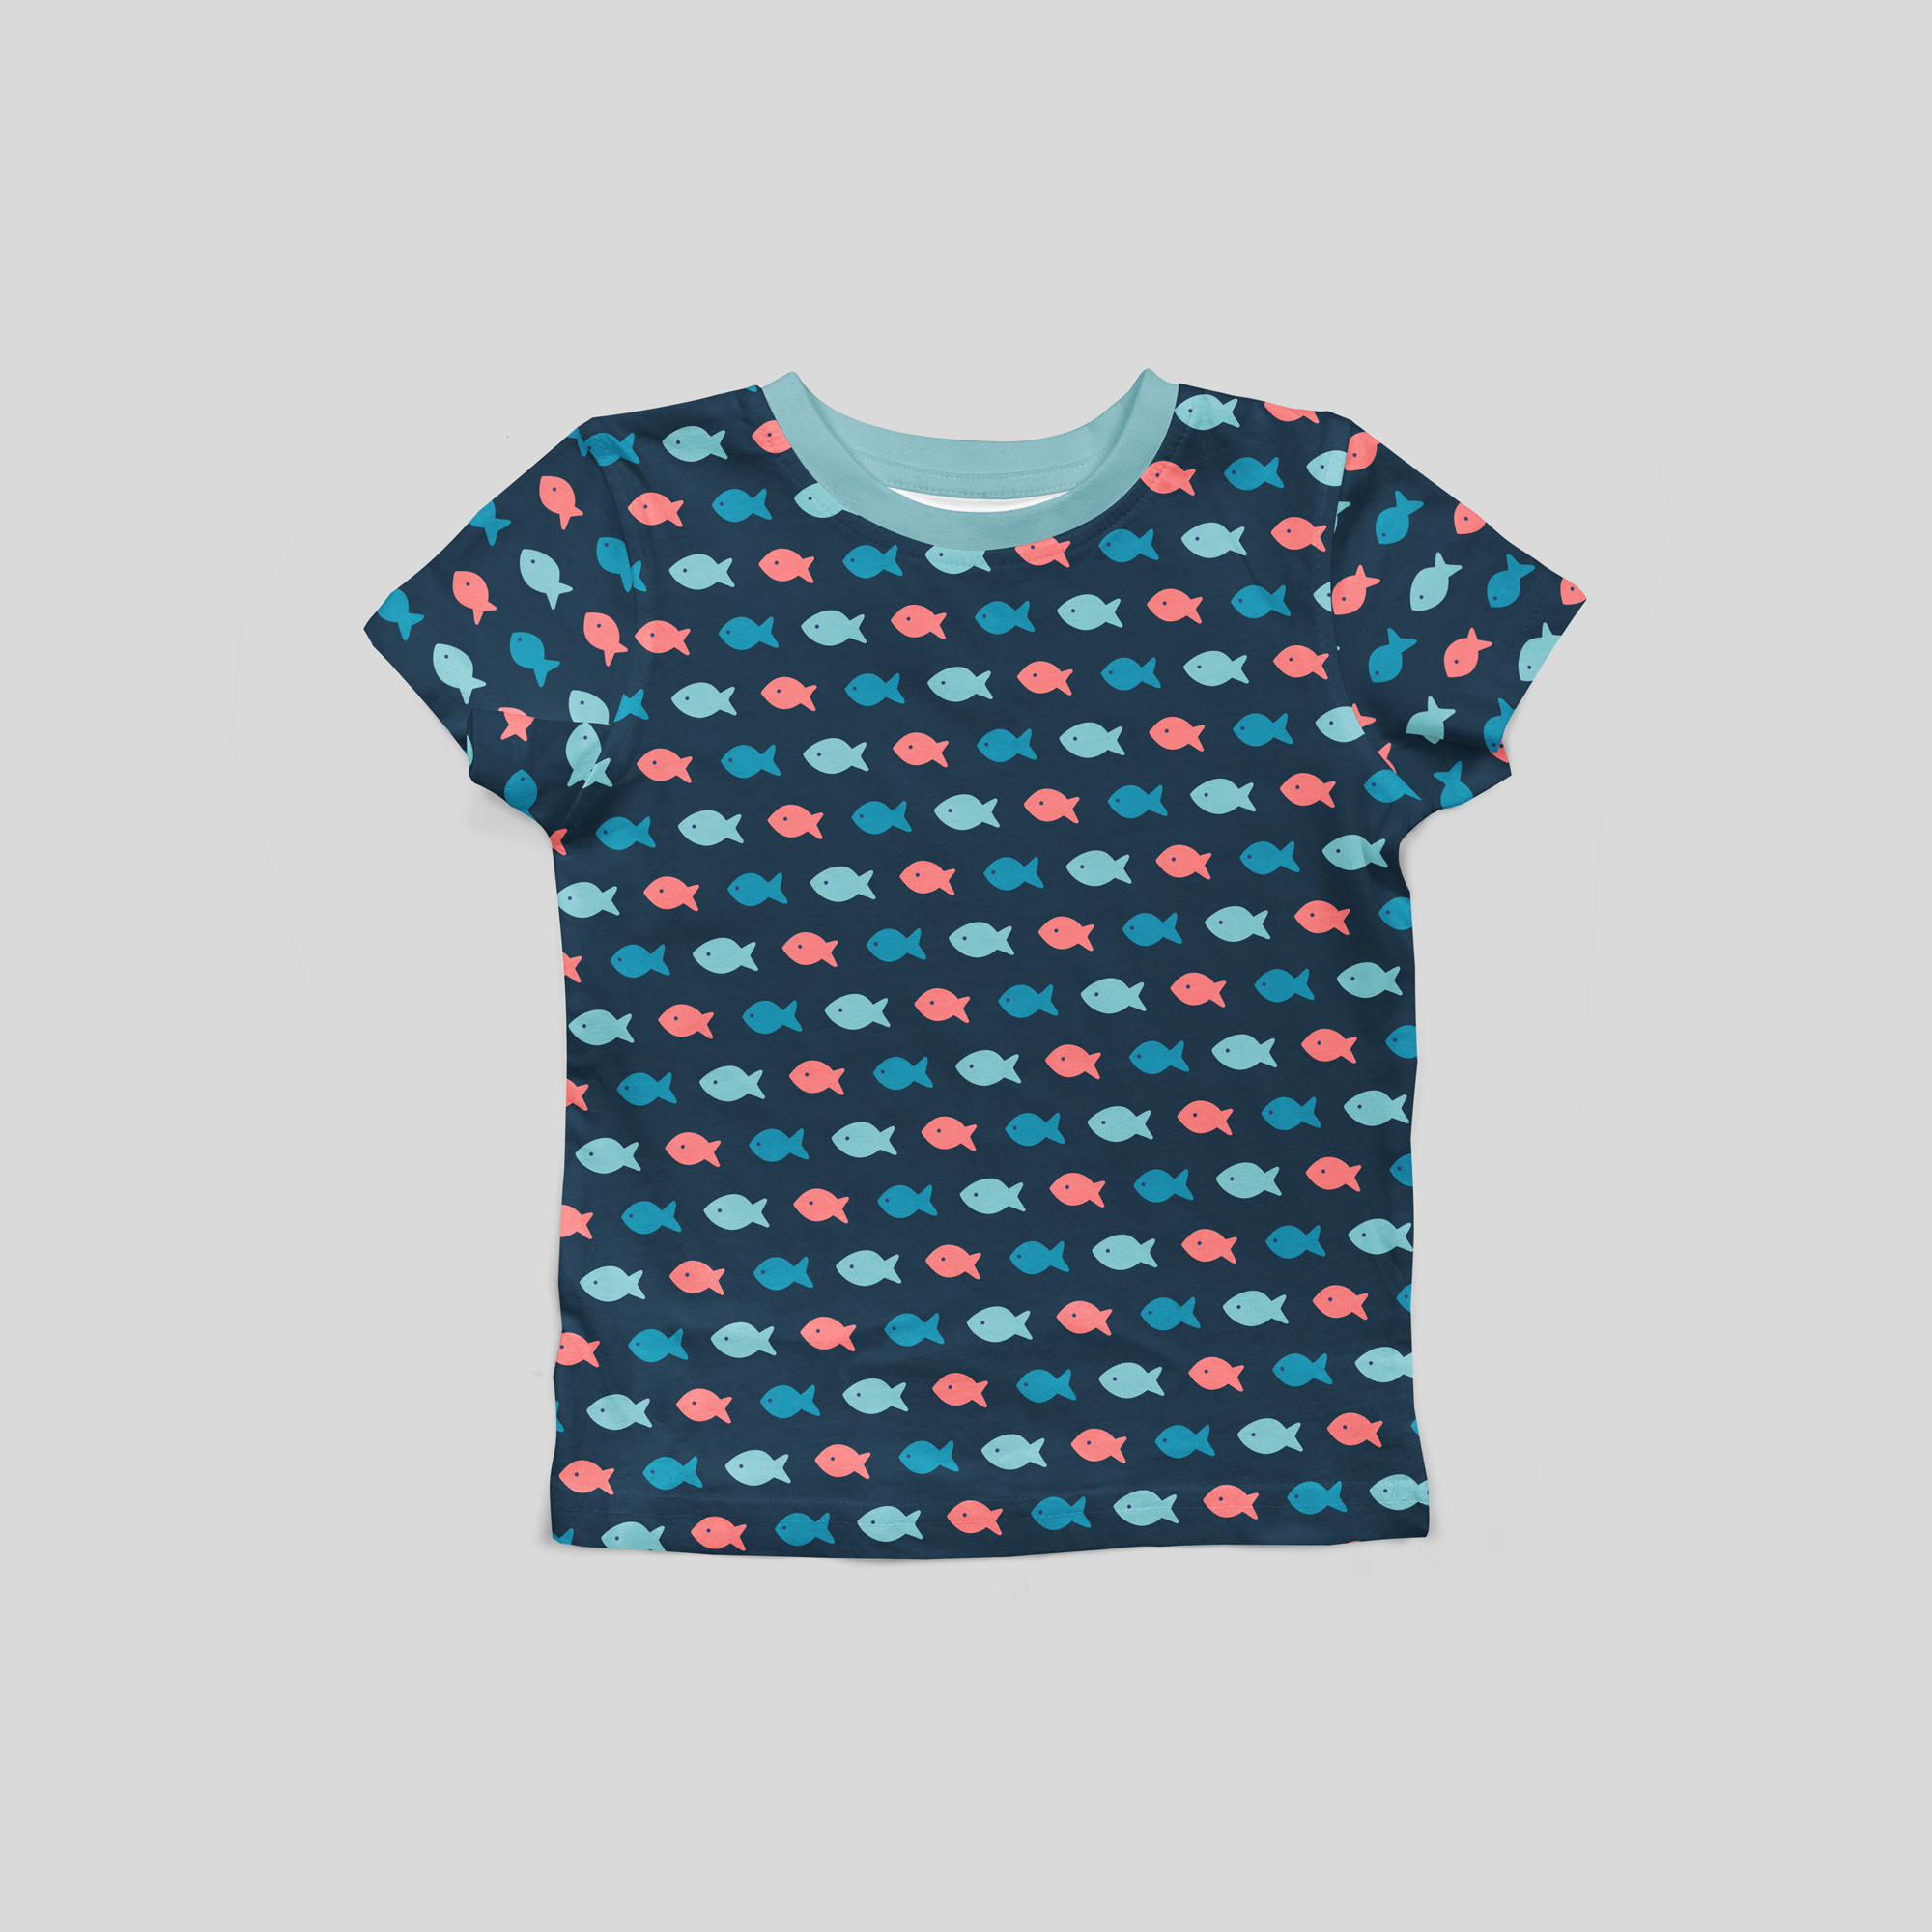 SST03 - Toddler Sublimated Short Sleeve Jersey